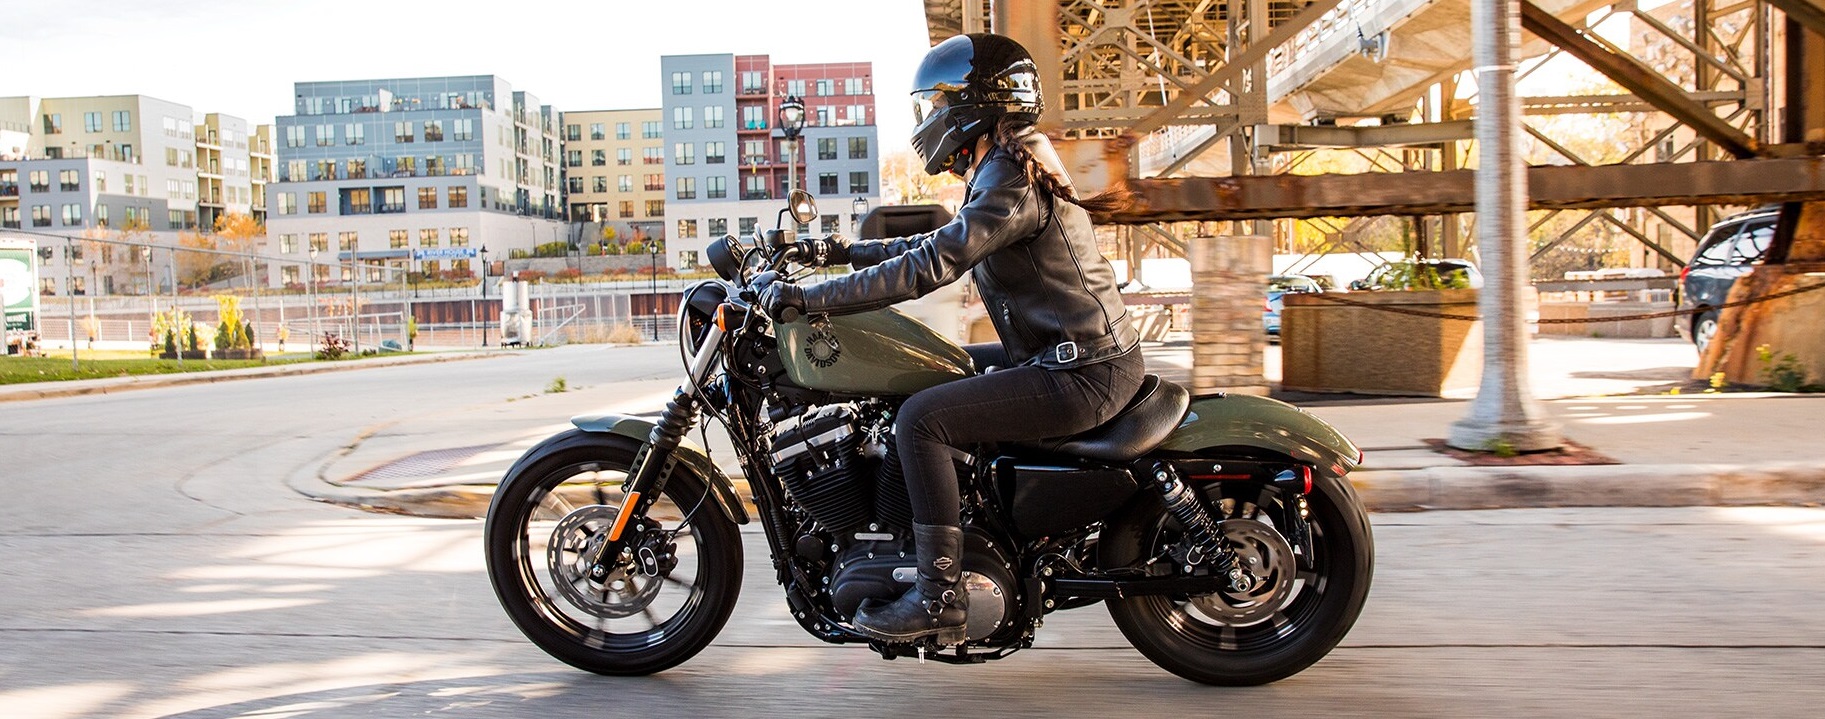 2021 Harley-Davidson® Iron 883™ in Revere MA